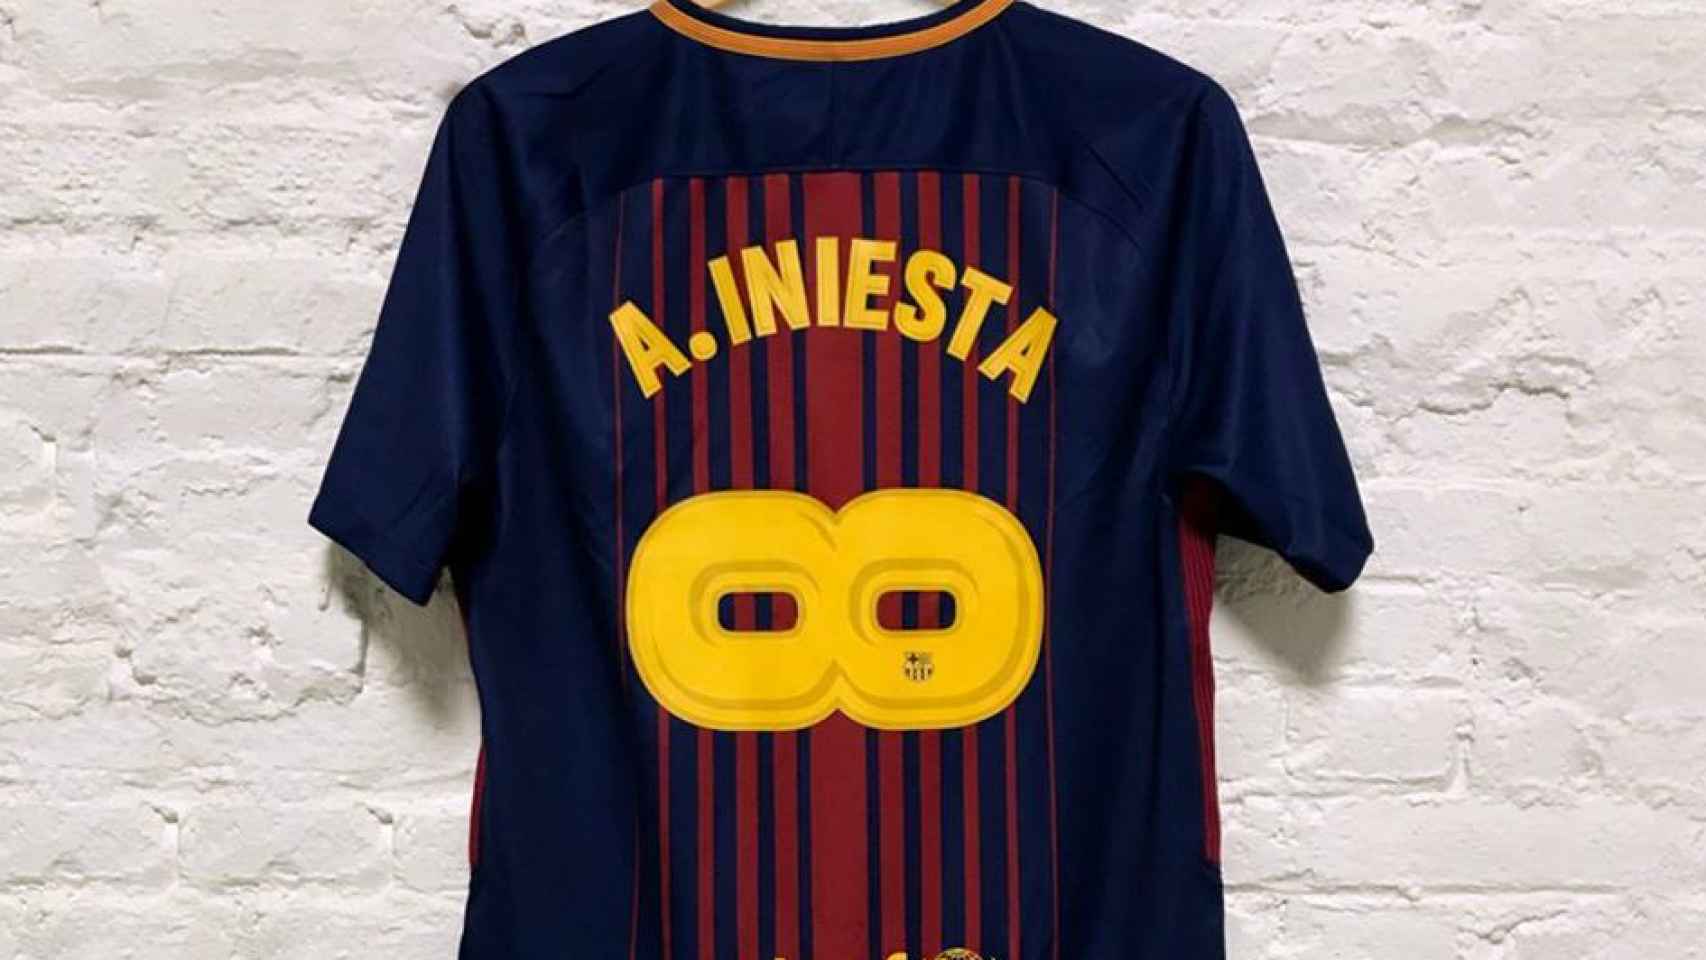 La camiseta especial de Andrés Iniesta.